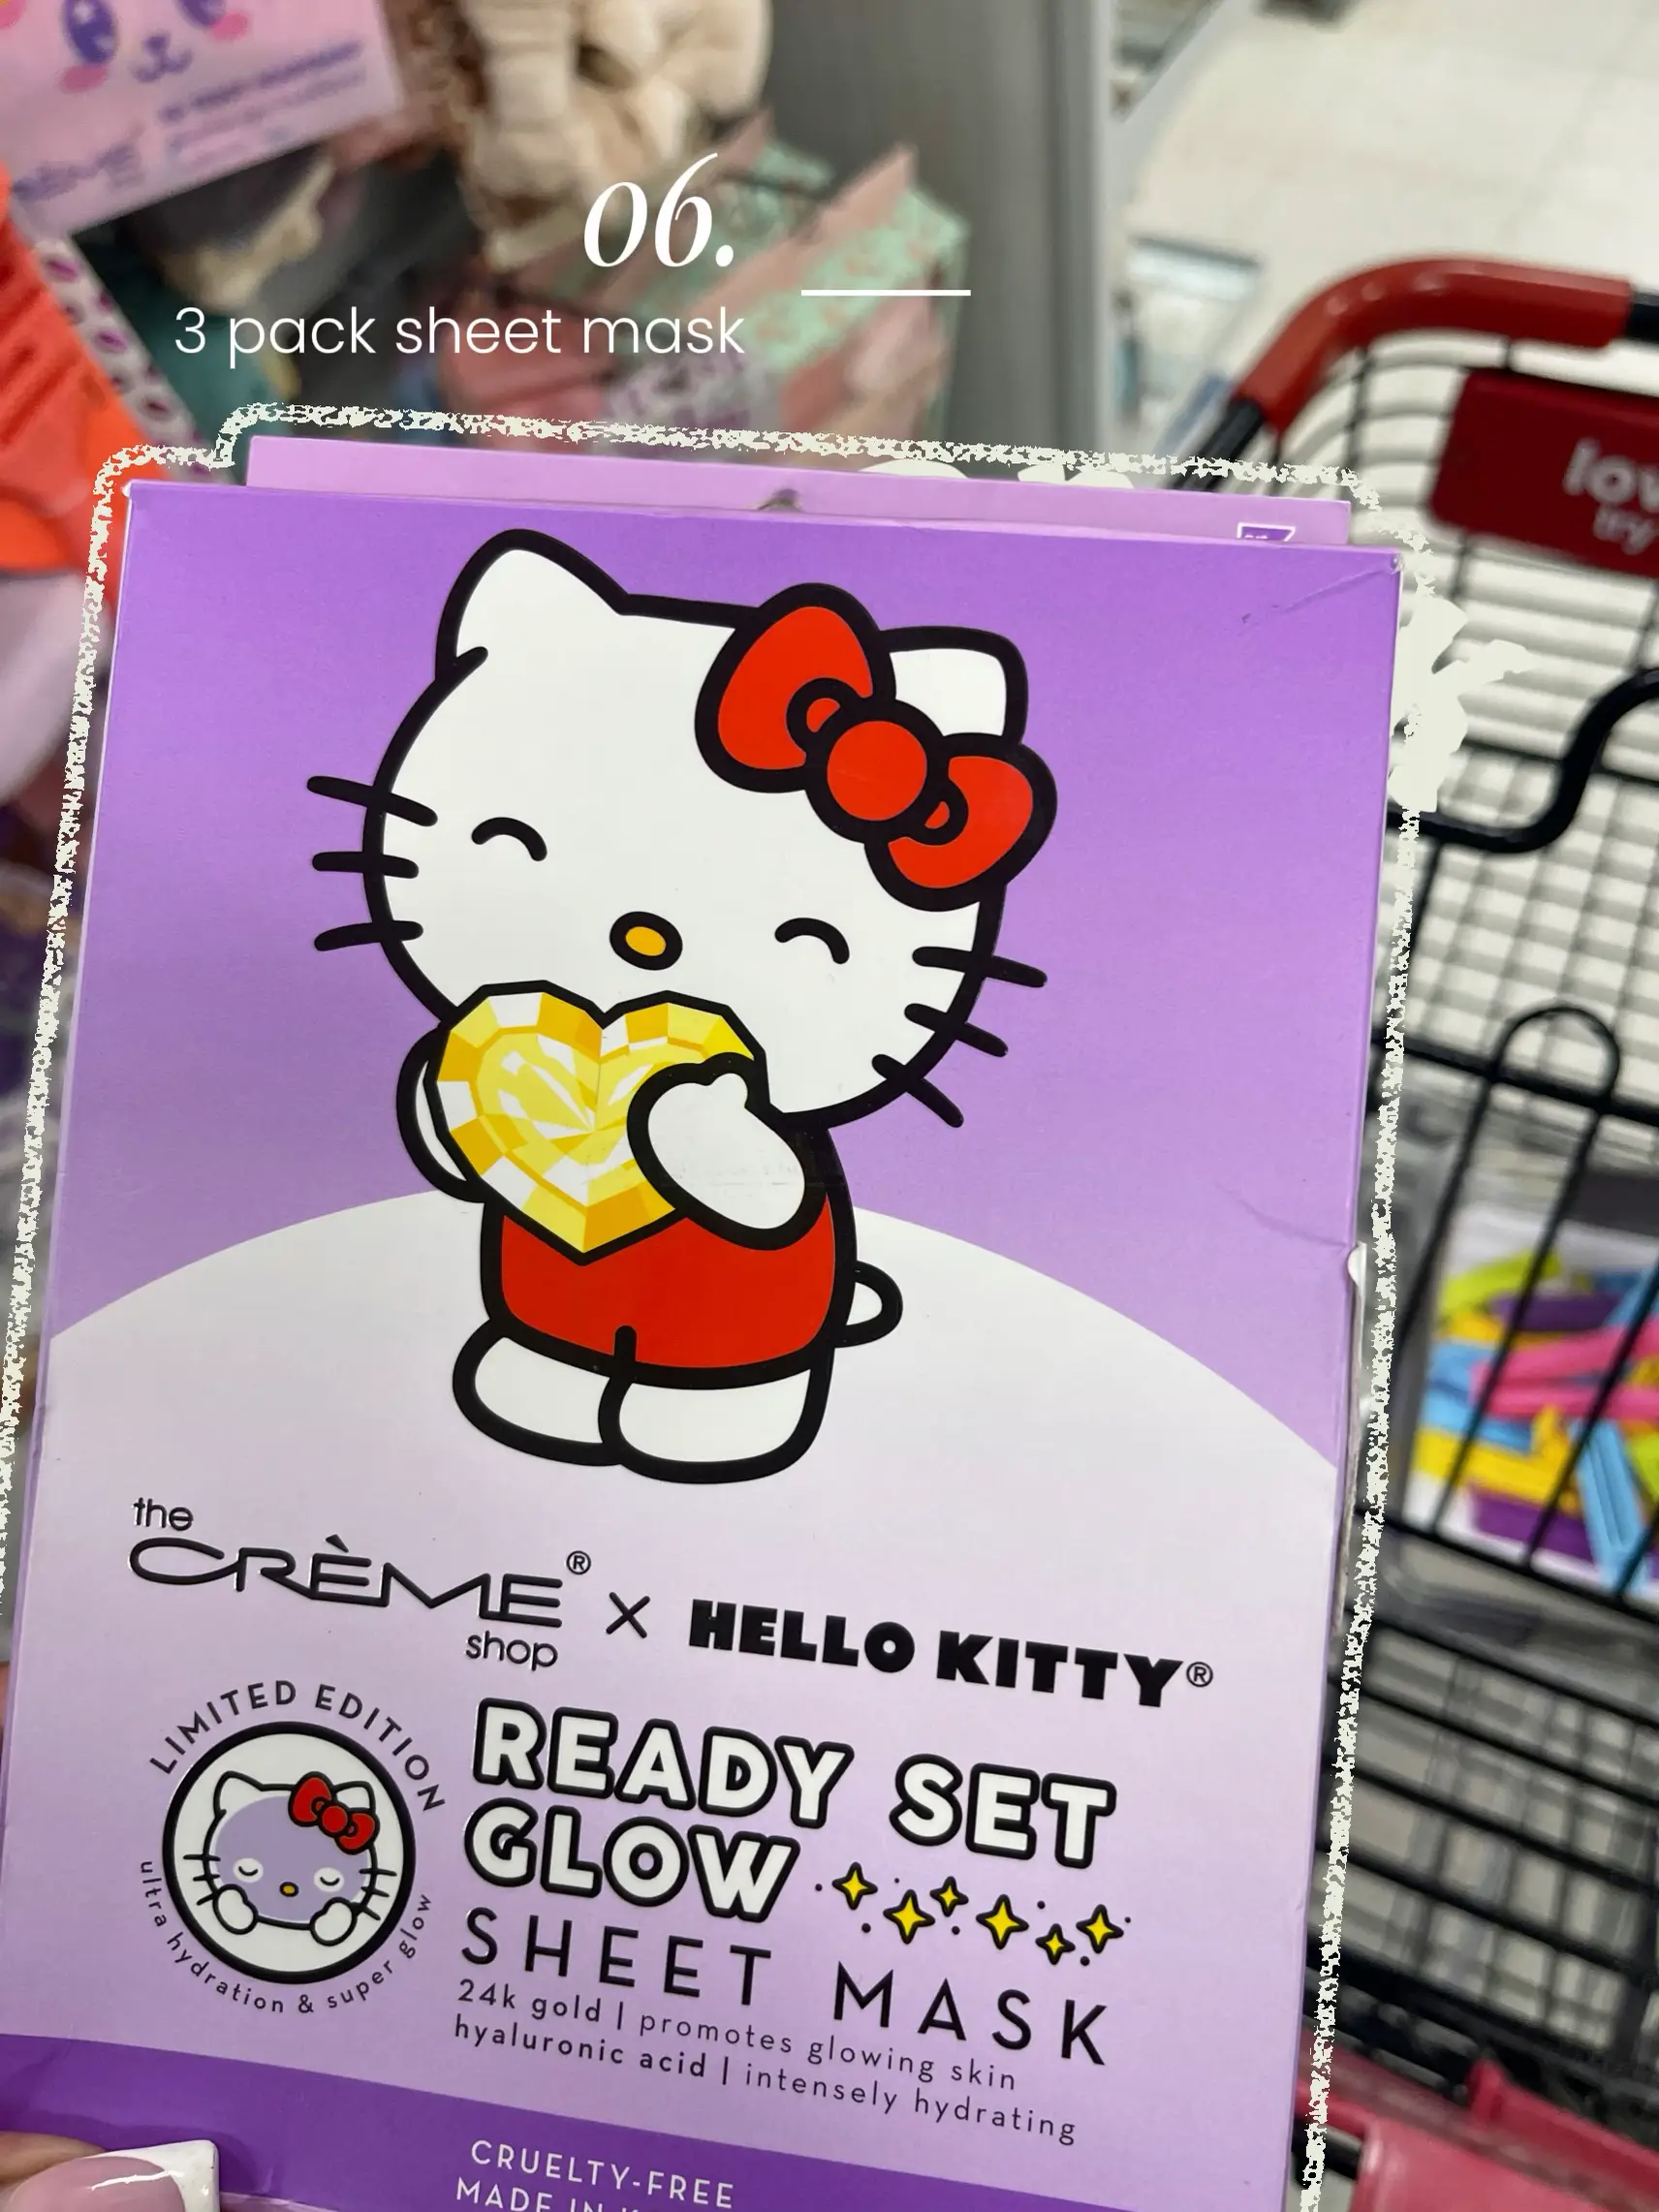 Vintage Valentine's Day Card Single Sided Hello Kitty I've got a